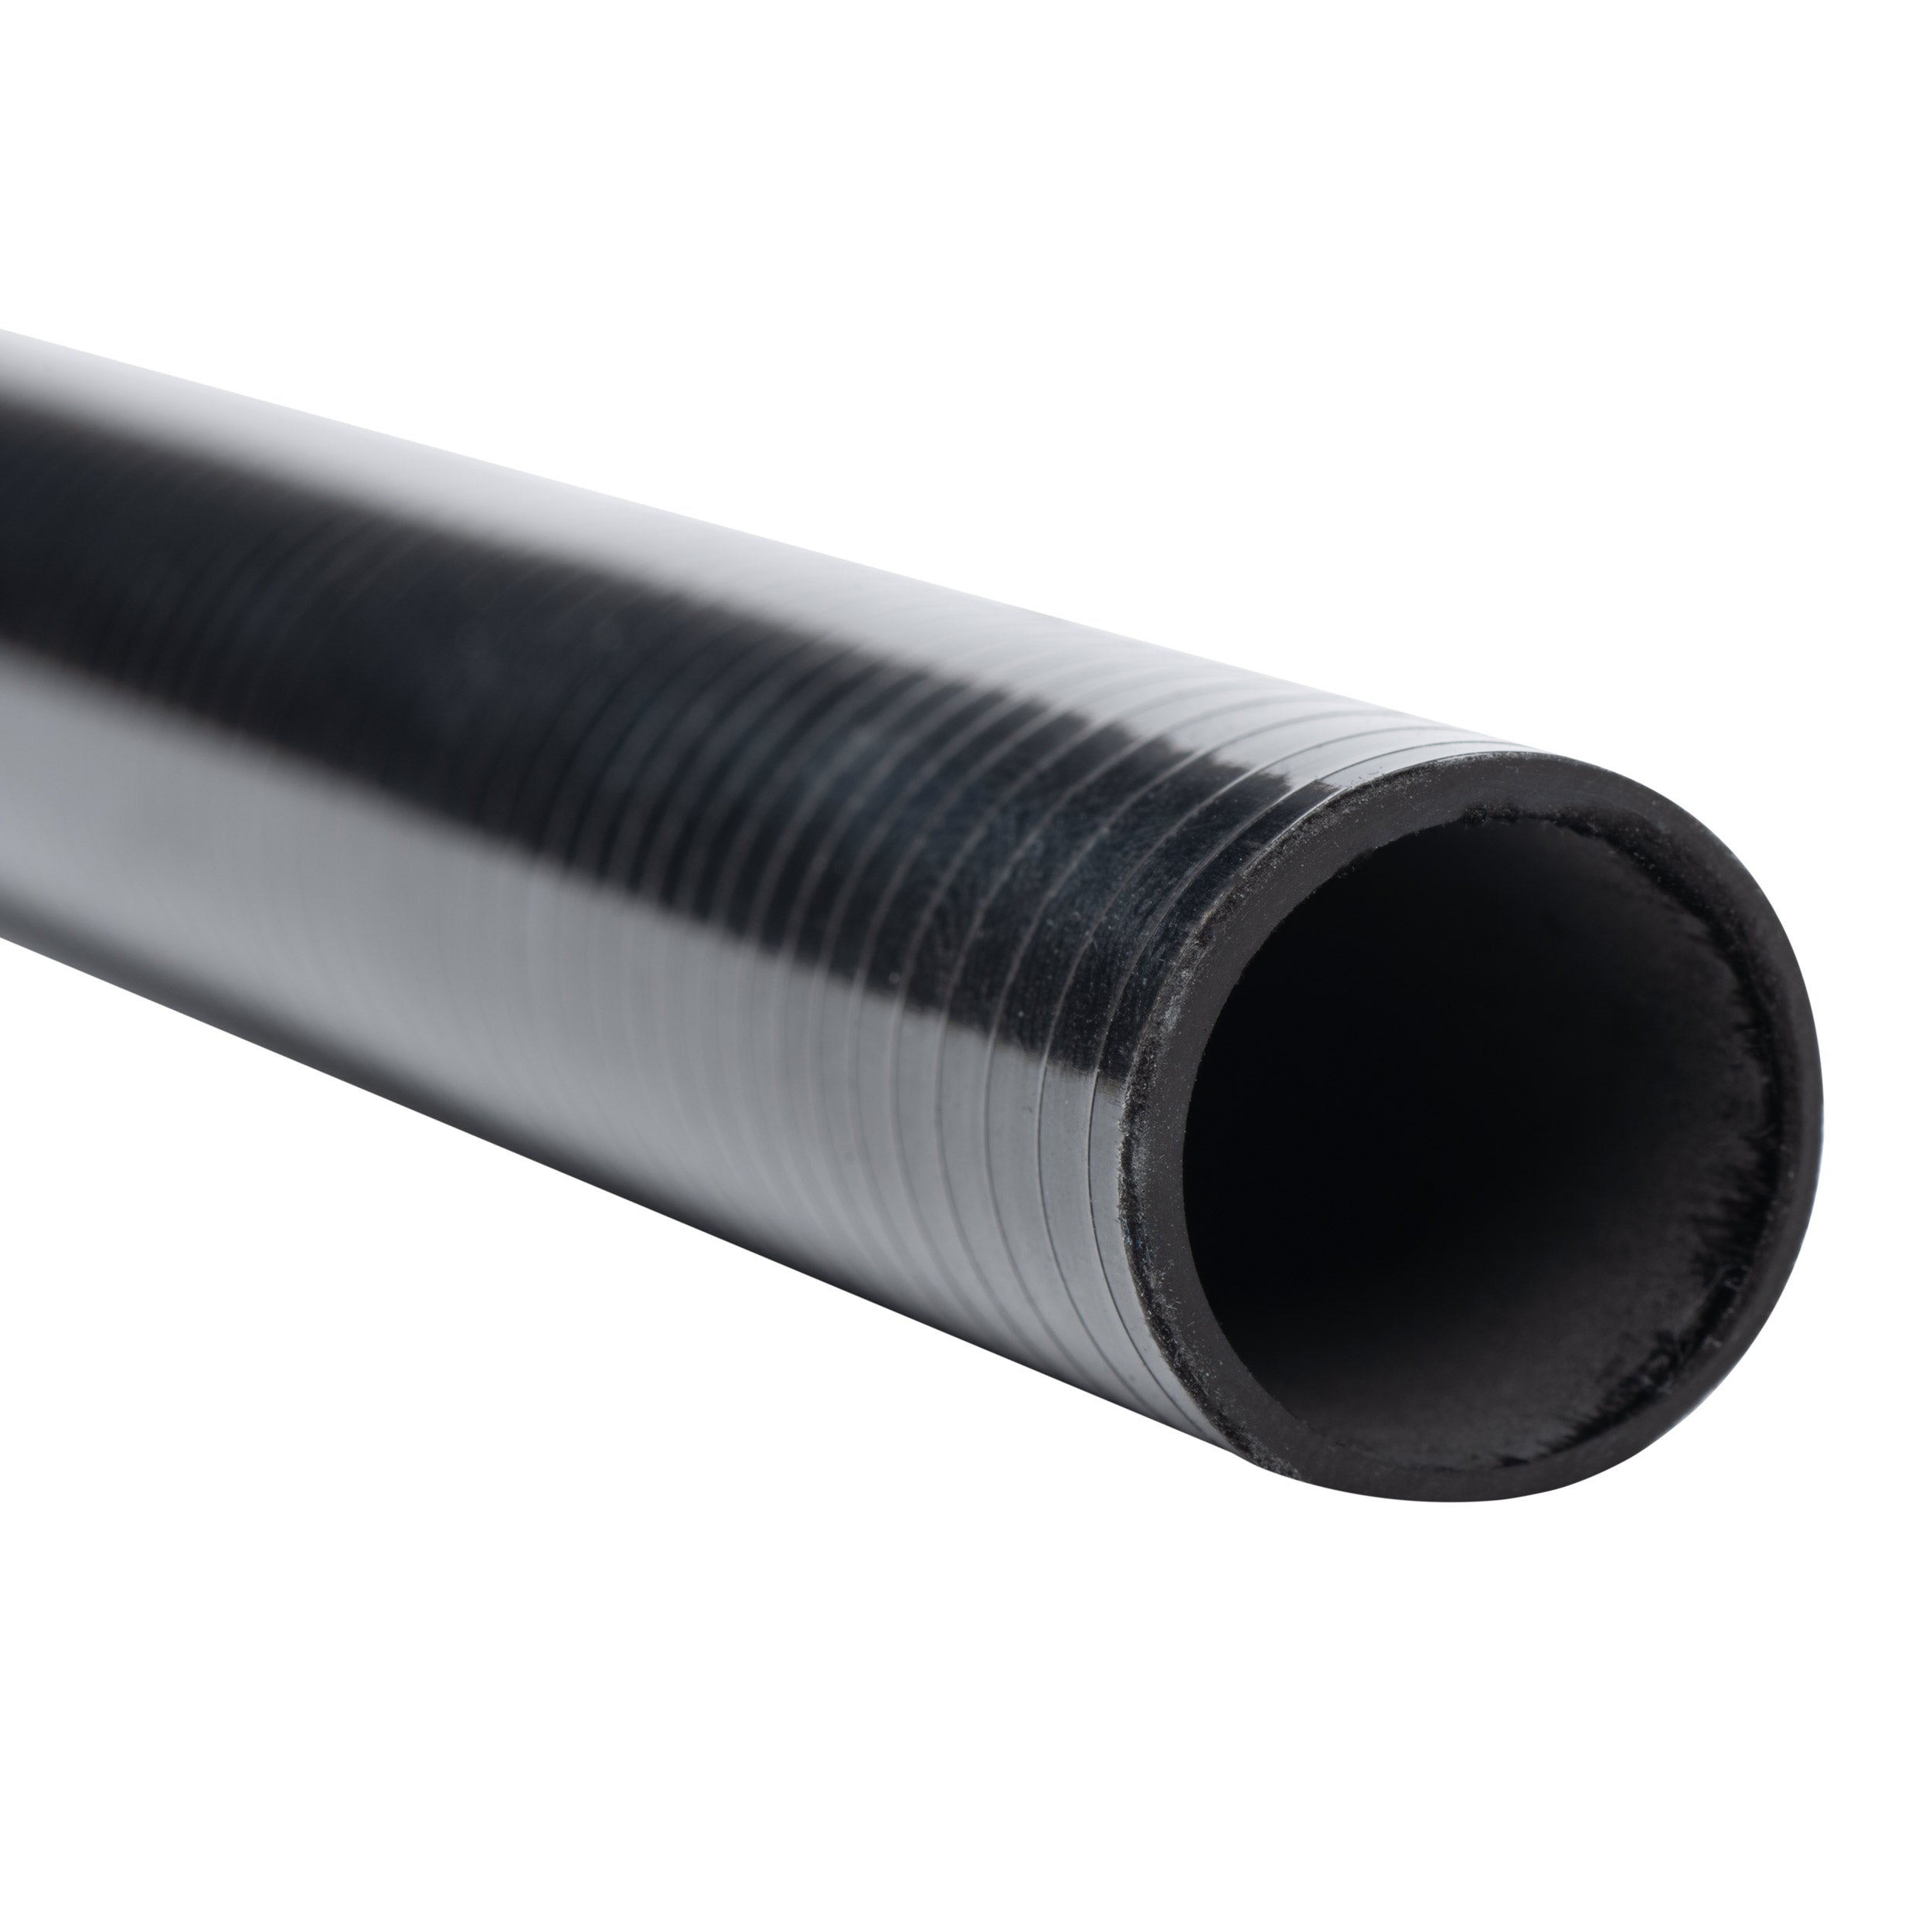 Cashion CR6r Carbon Fiber Popping Rod Blank - CR6r-iP843